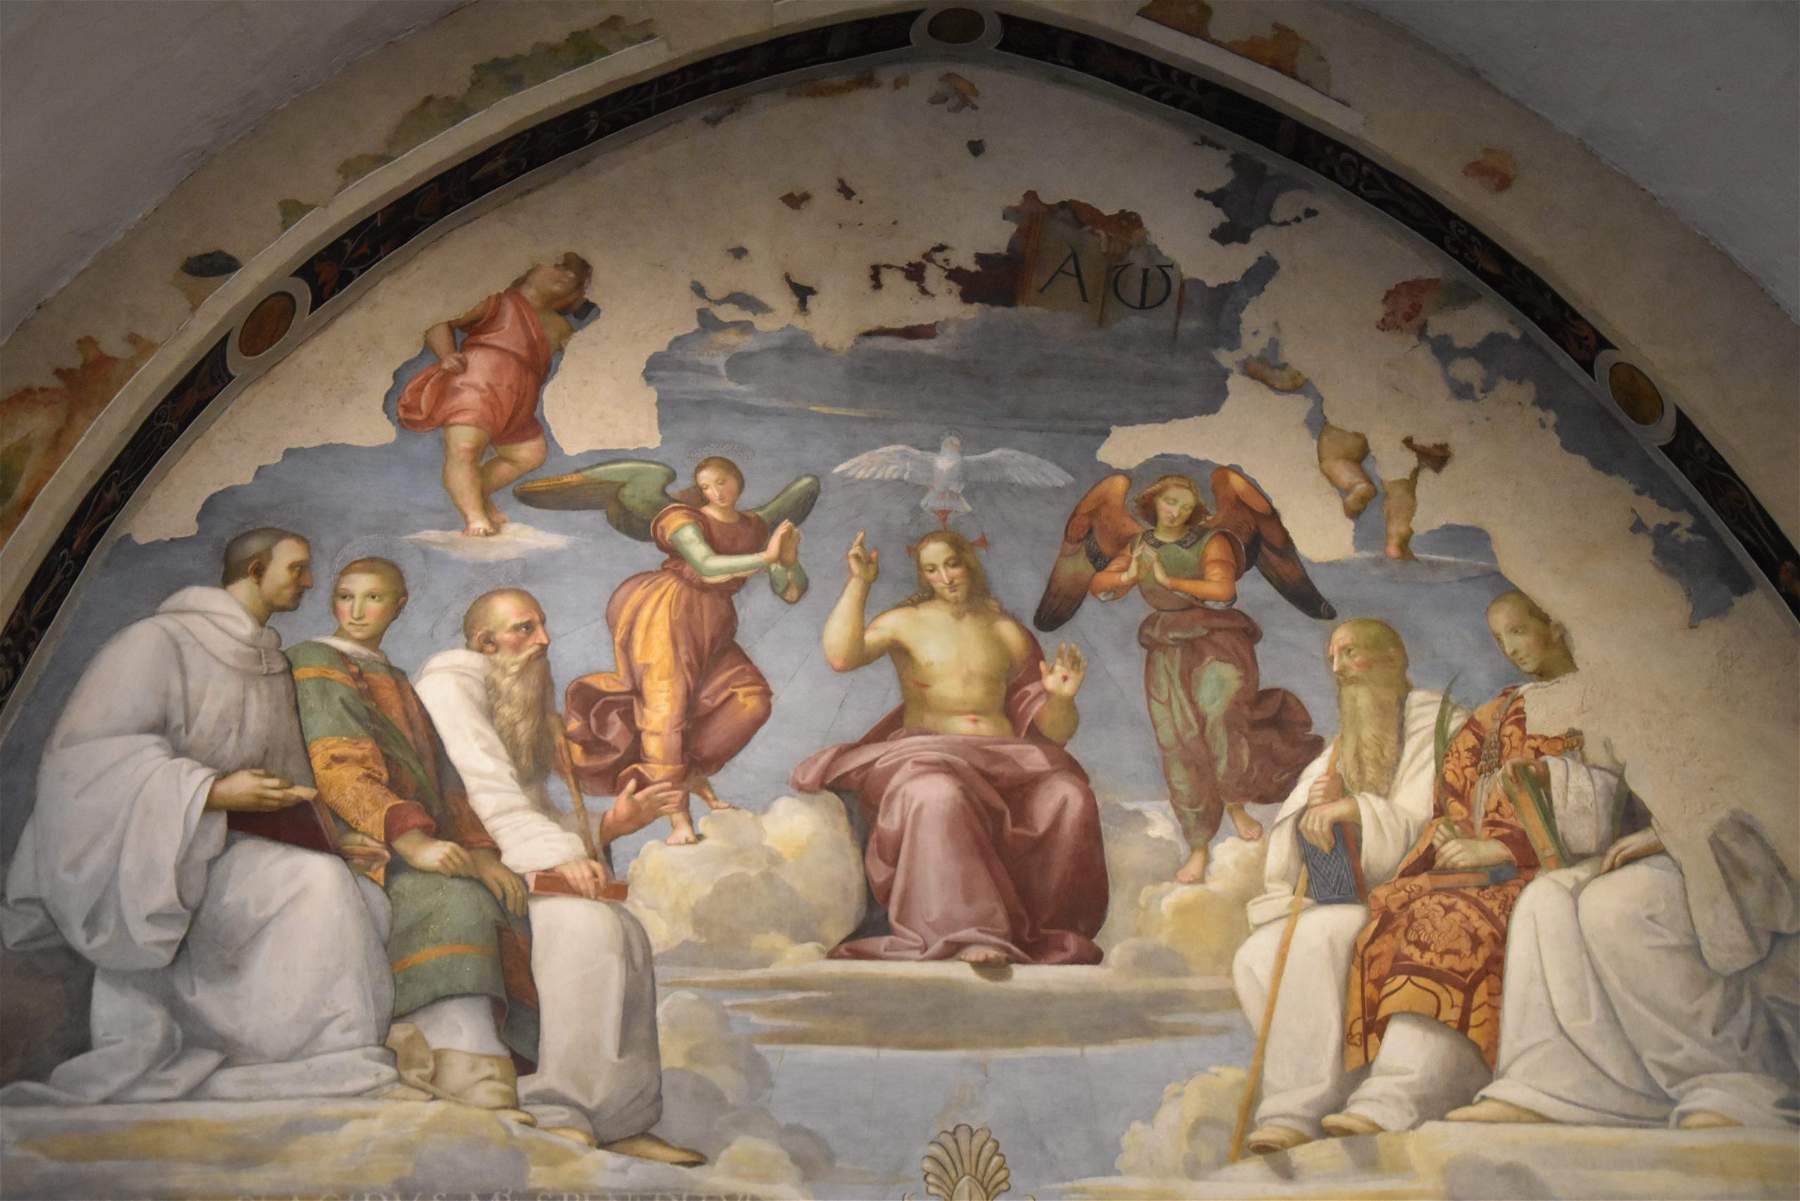 Perugia, Raphael and Perugino frescoes in San Severo Chapel restored